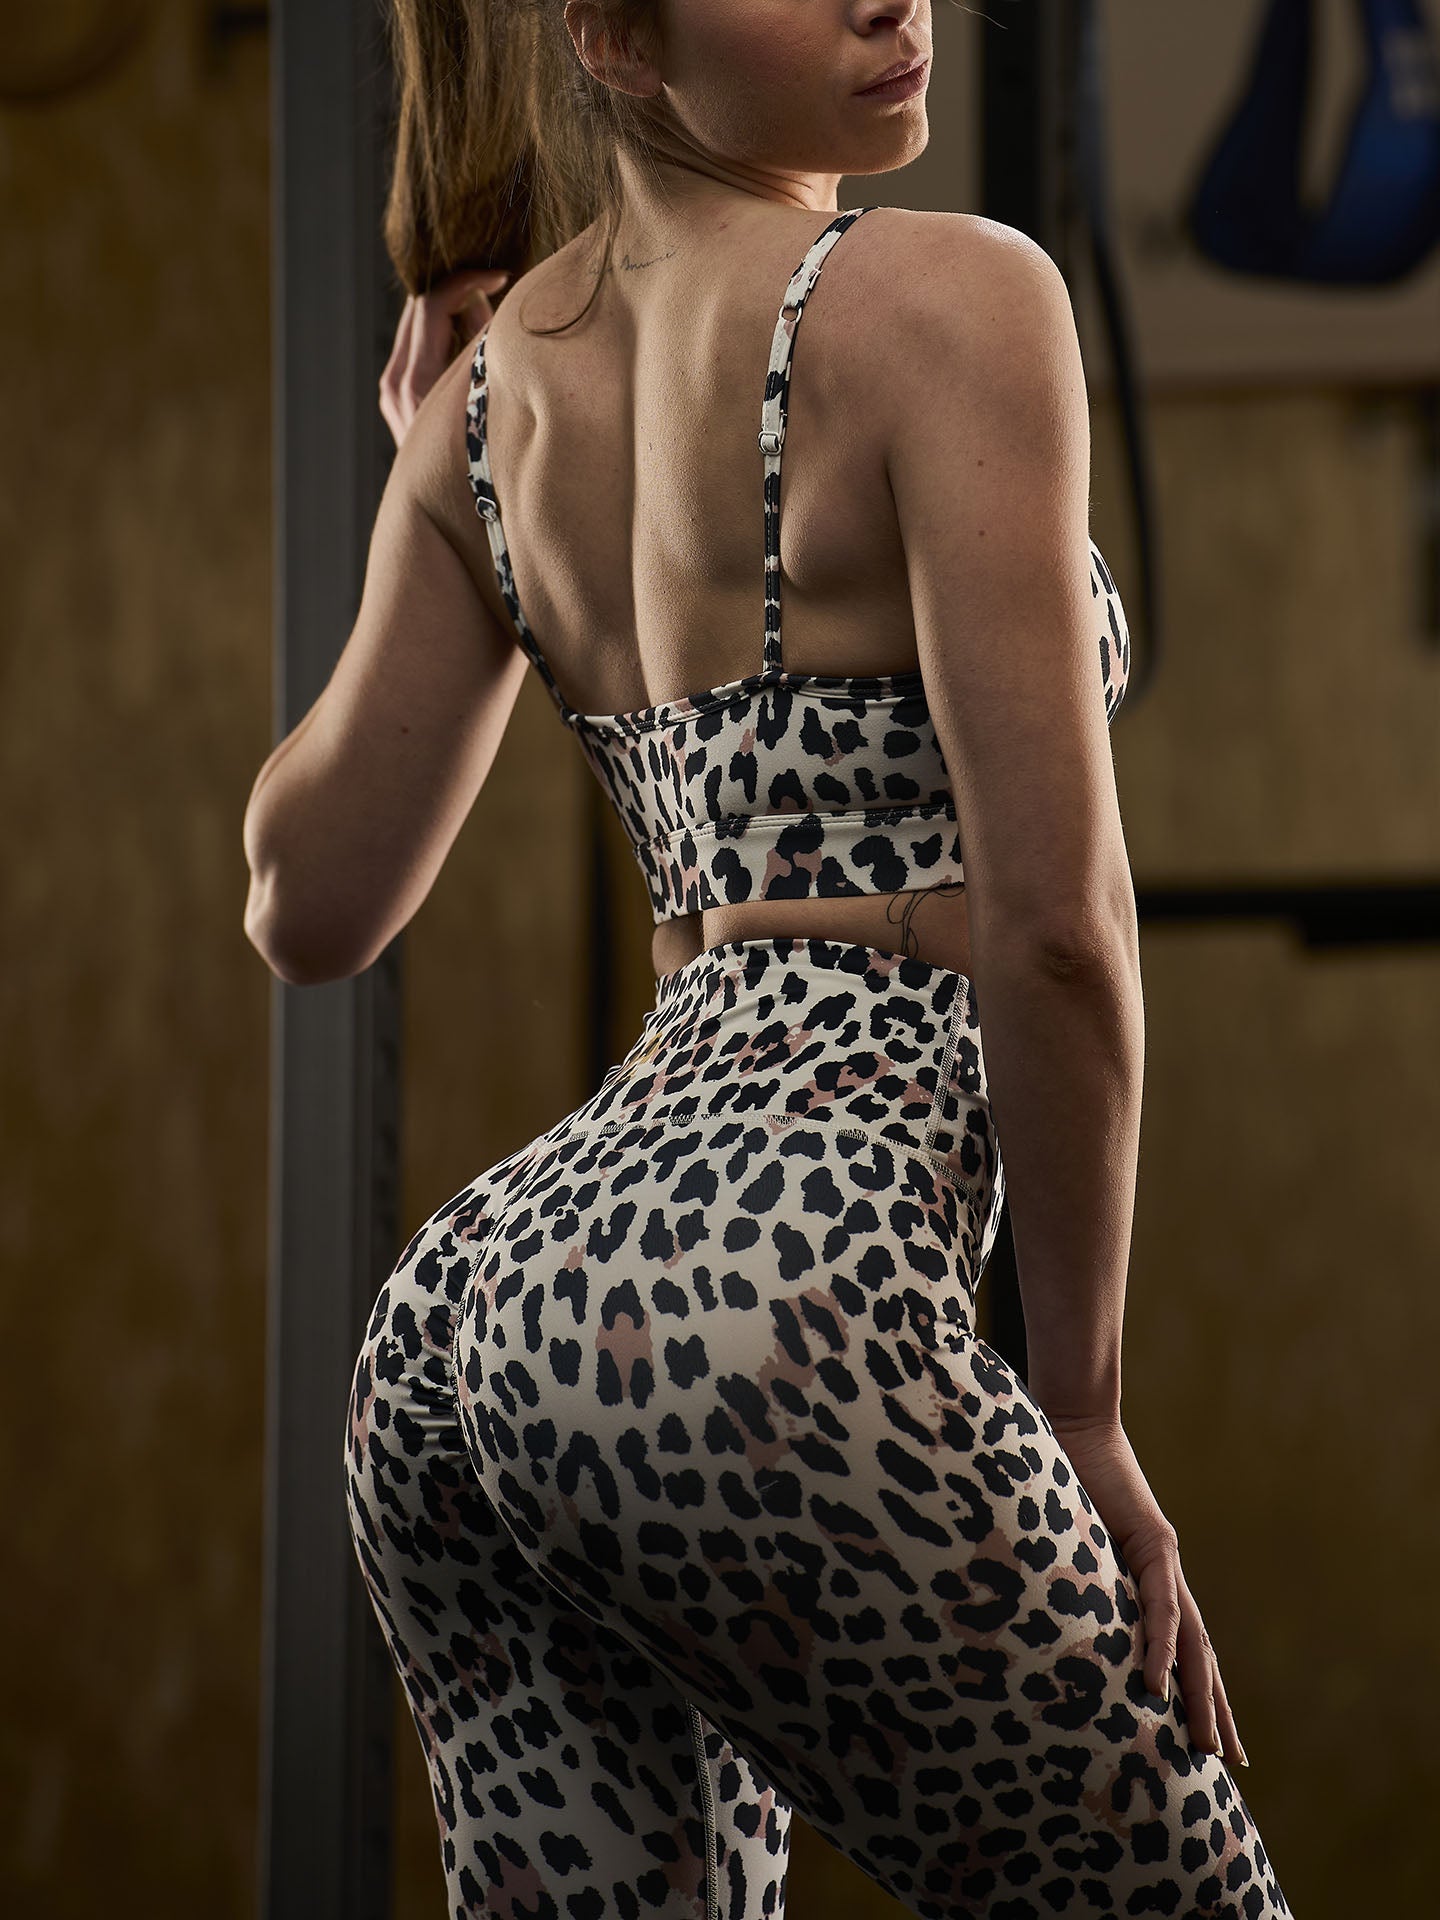 The Cougar - leggings palestra da donna effetto push-up